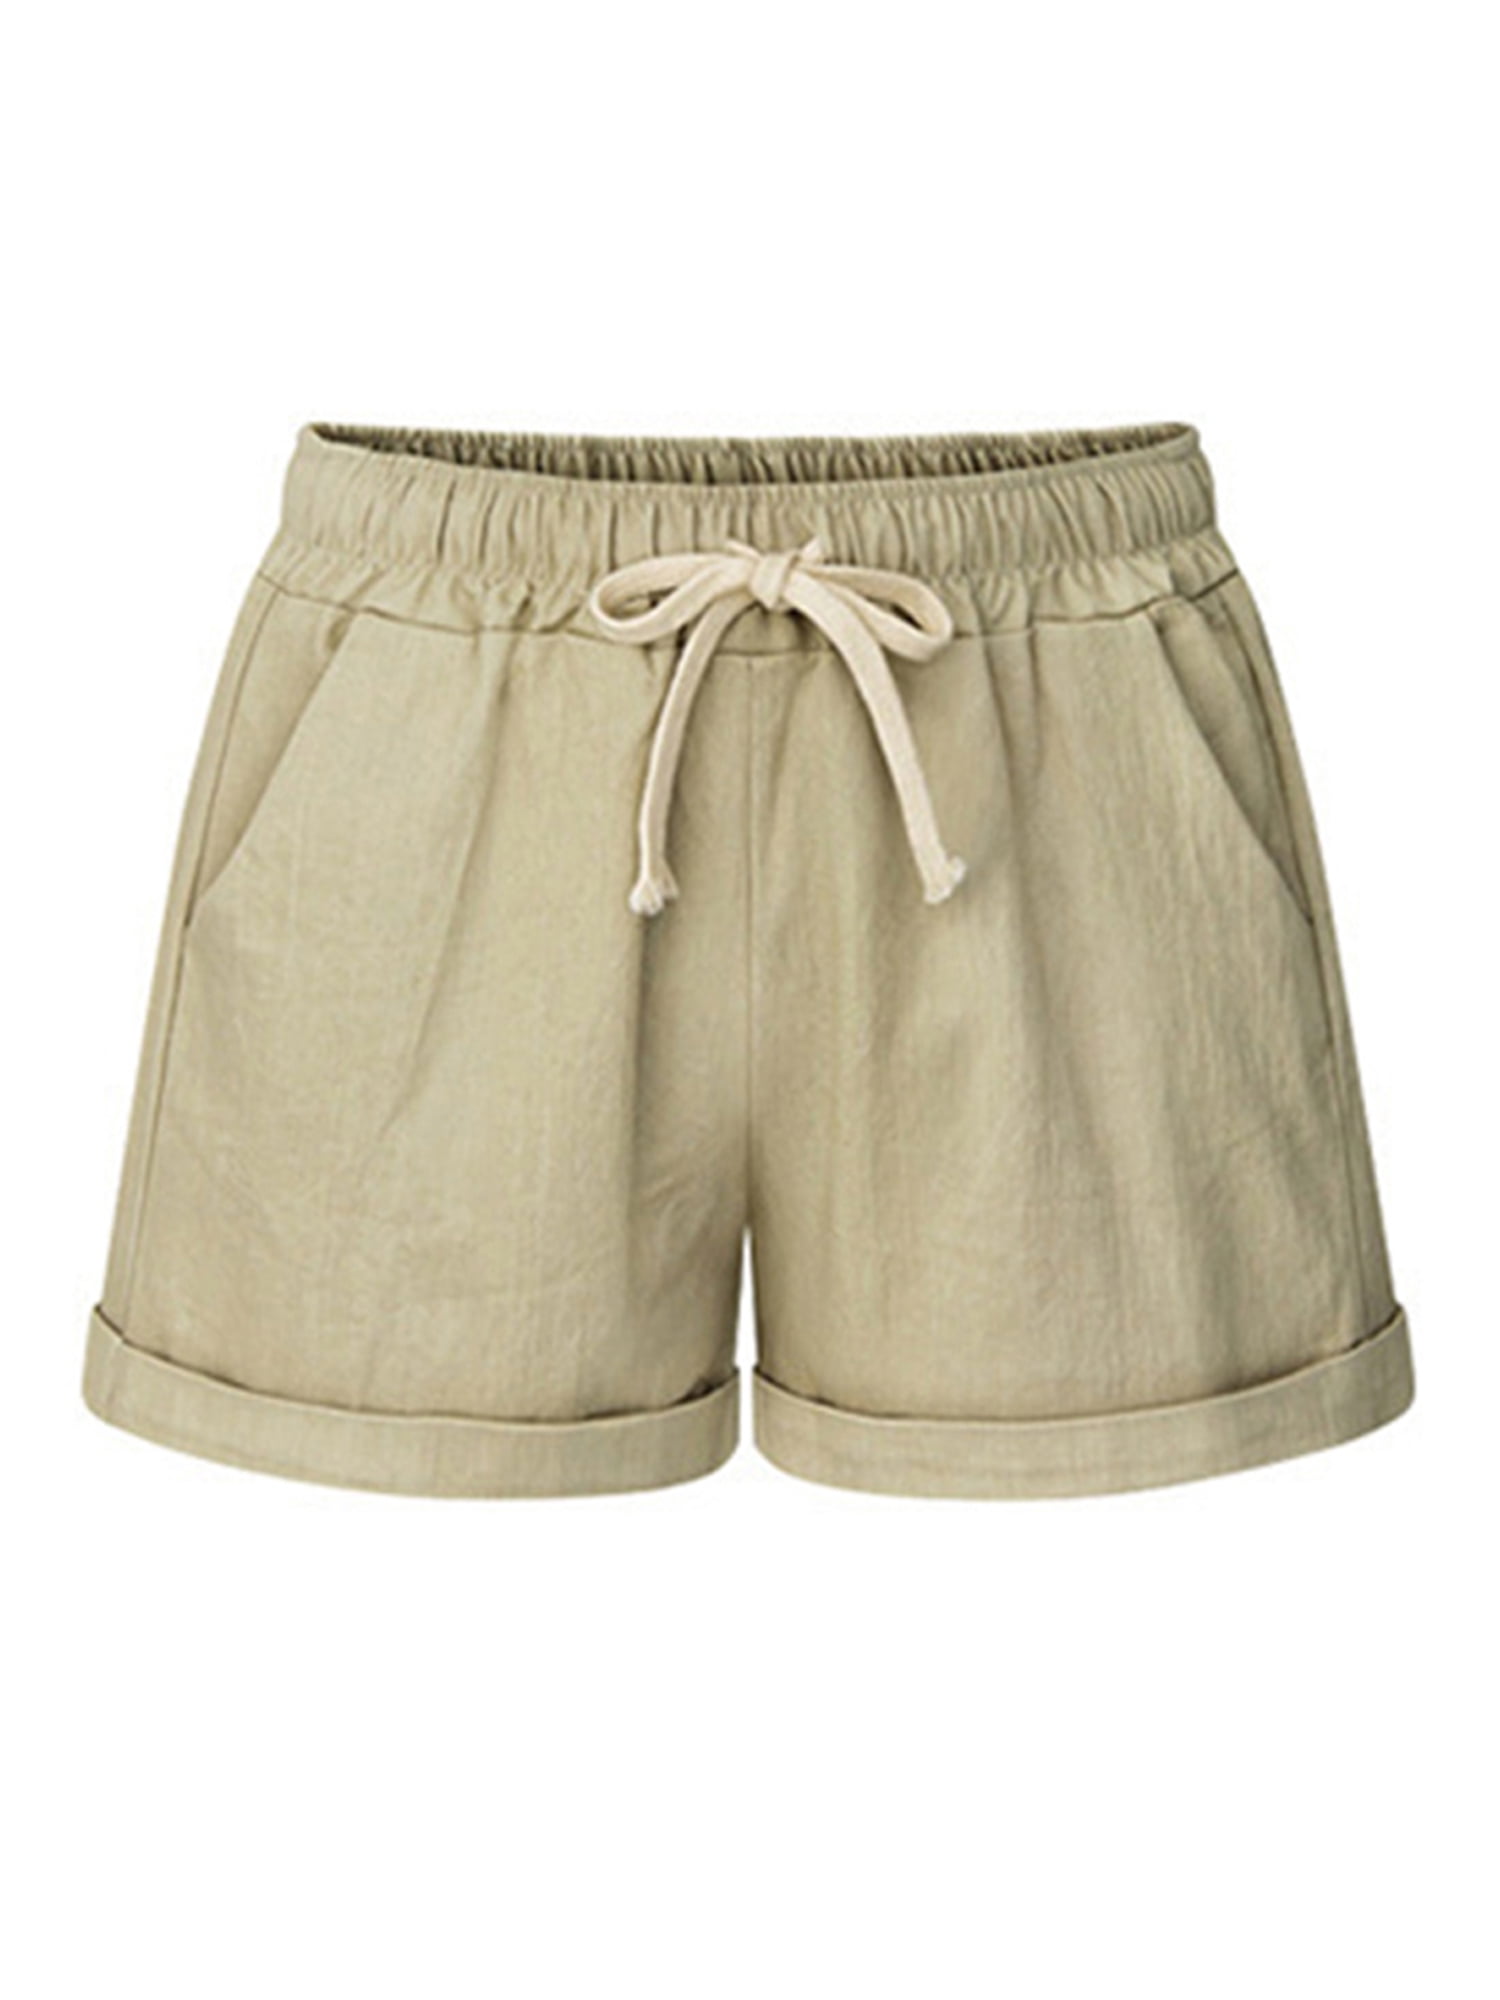 Ladies Twin Pack Shorts Womens Hot Pants Lounge Beach Shorts Cotton Sizes 8-18